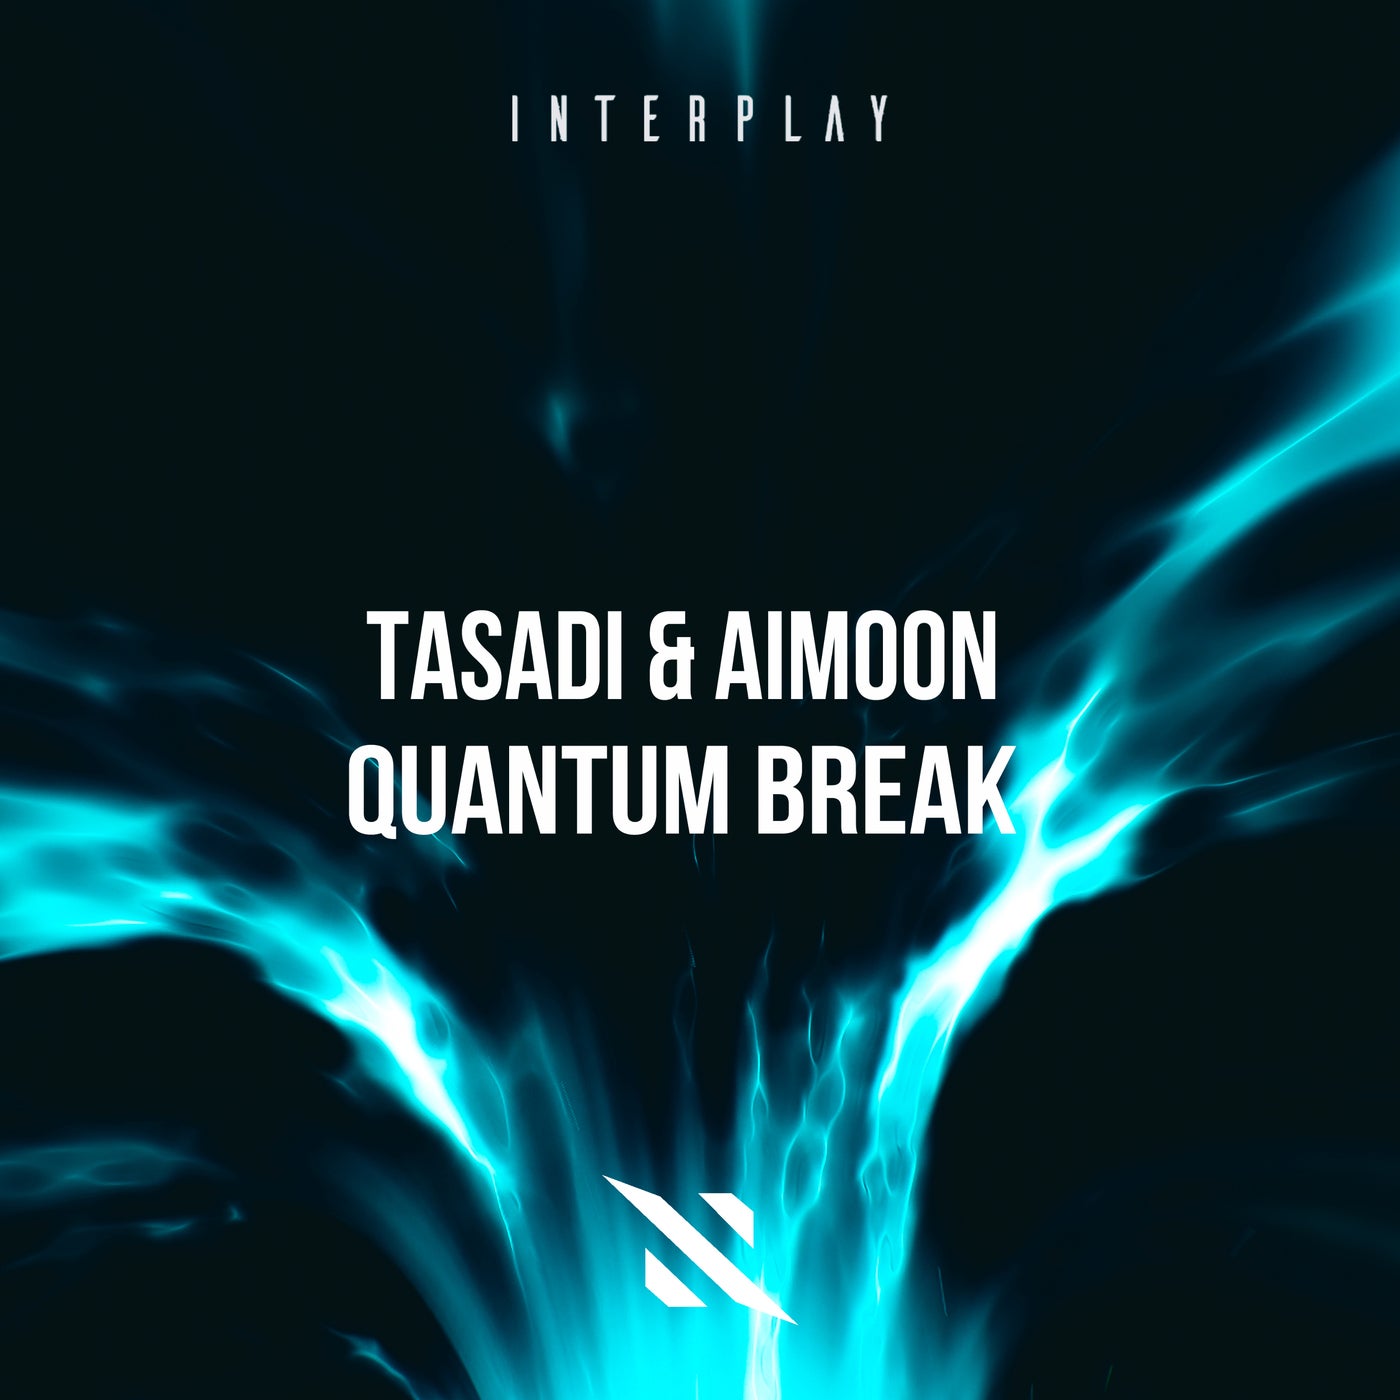 Tasadi & Aimoon - Quantum Break (Extended Mix)